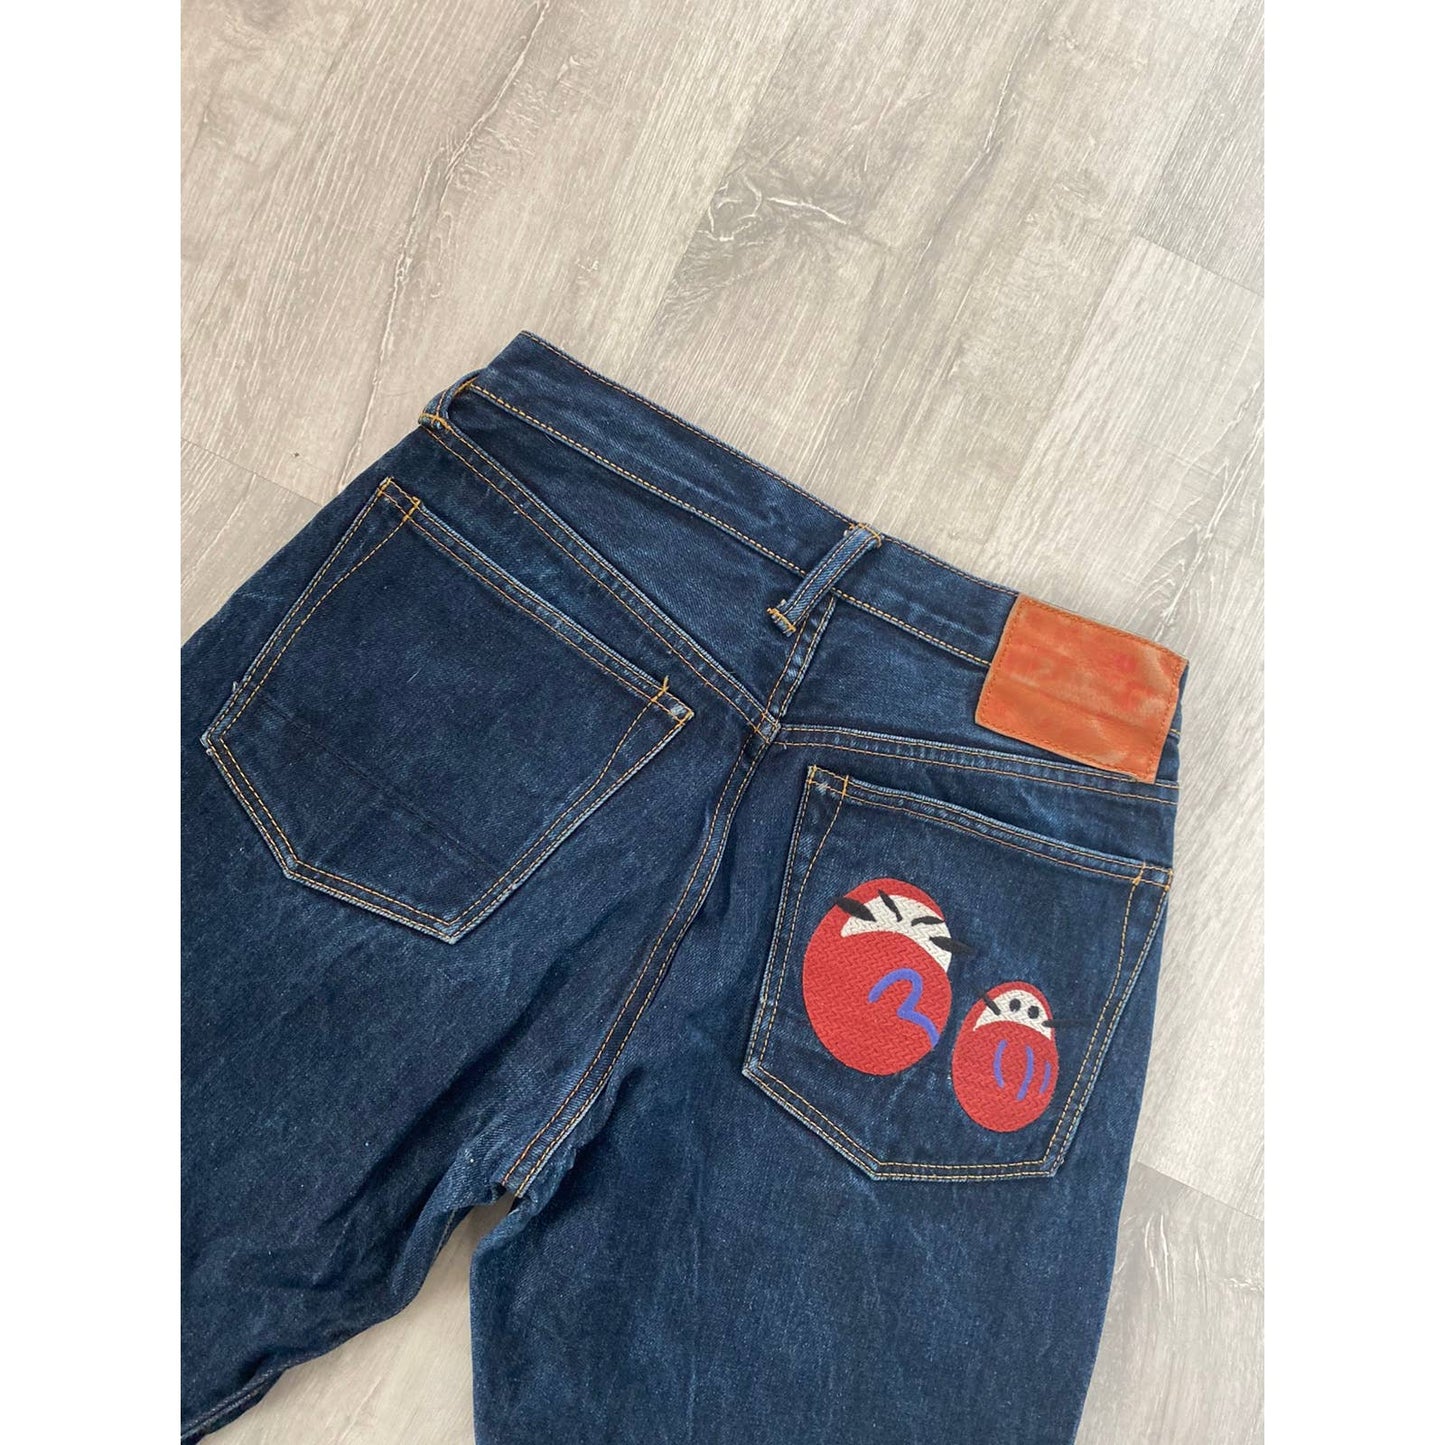 Evisu Japan vintage navy jeans denim pants baby logo